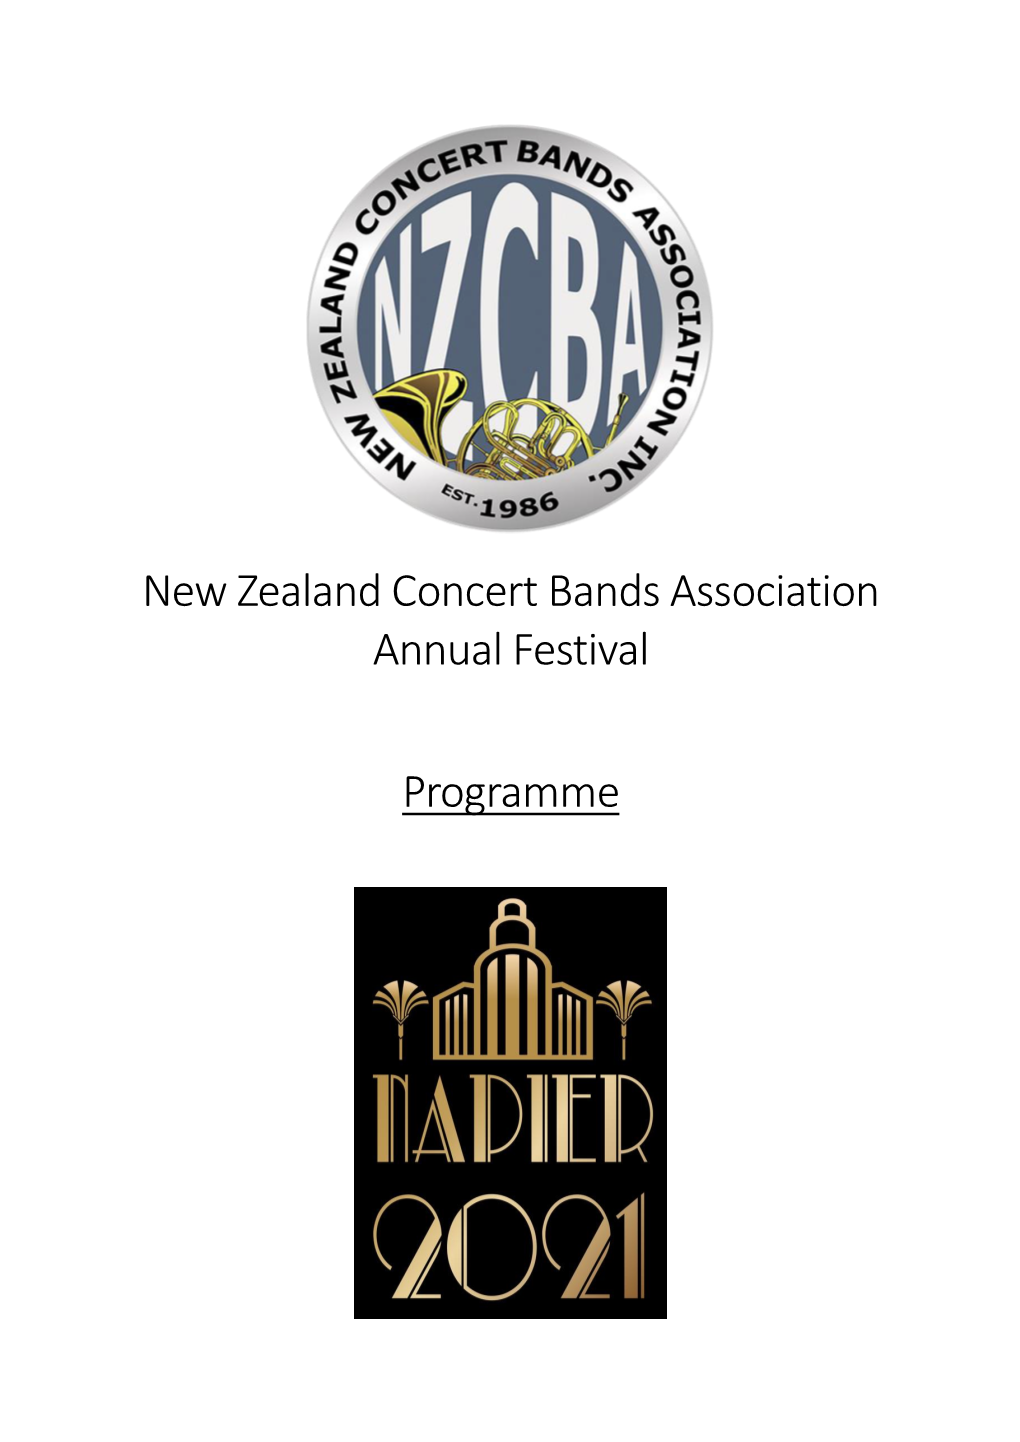 New Zealand Concert Bands Association Annual Festival